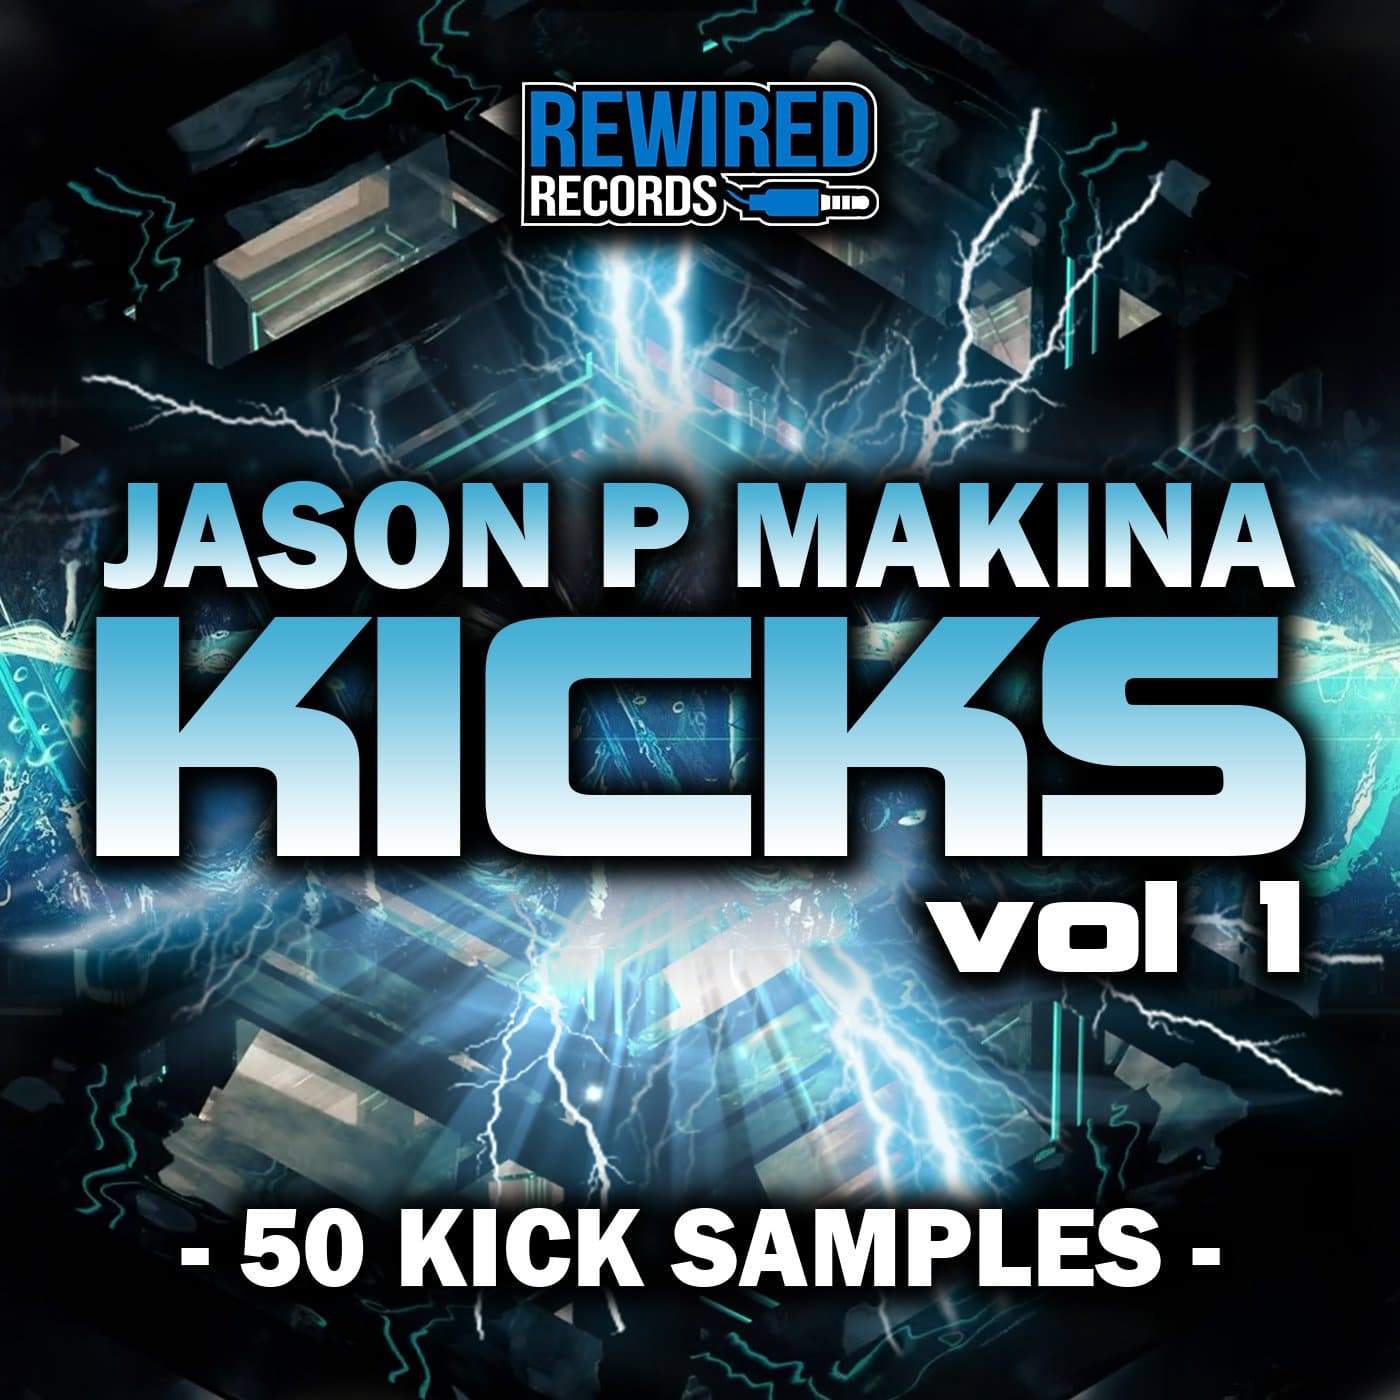 Jason P - Makina Kicks Vol 1 - Rewired Records